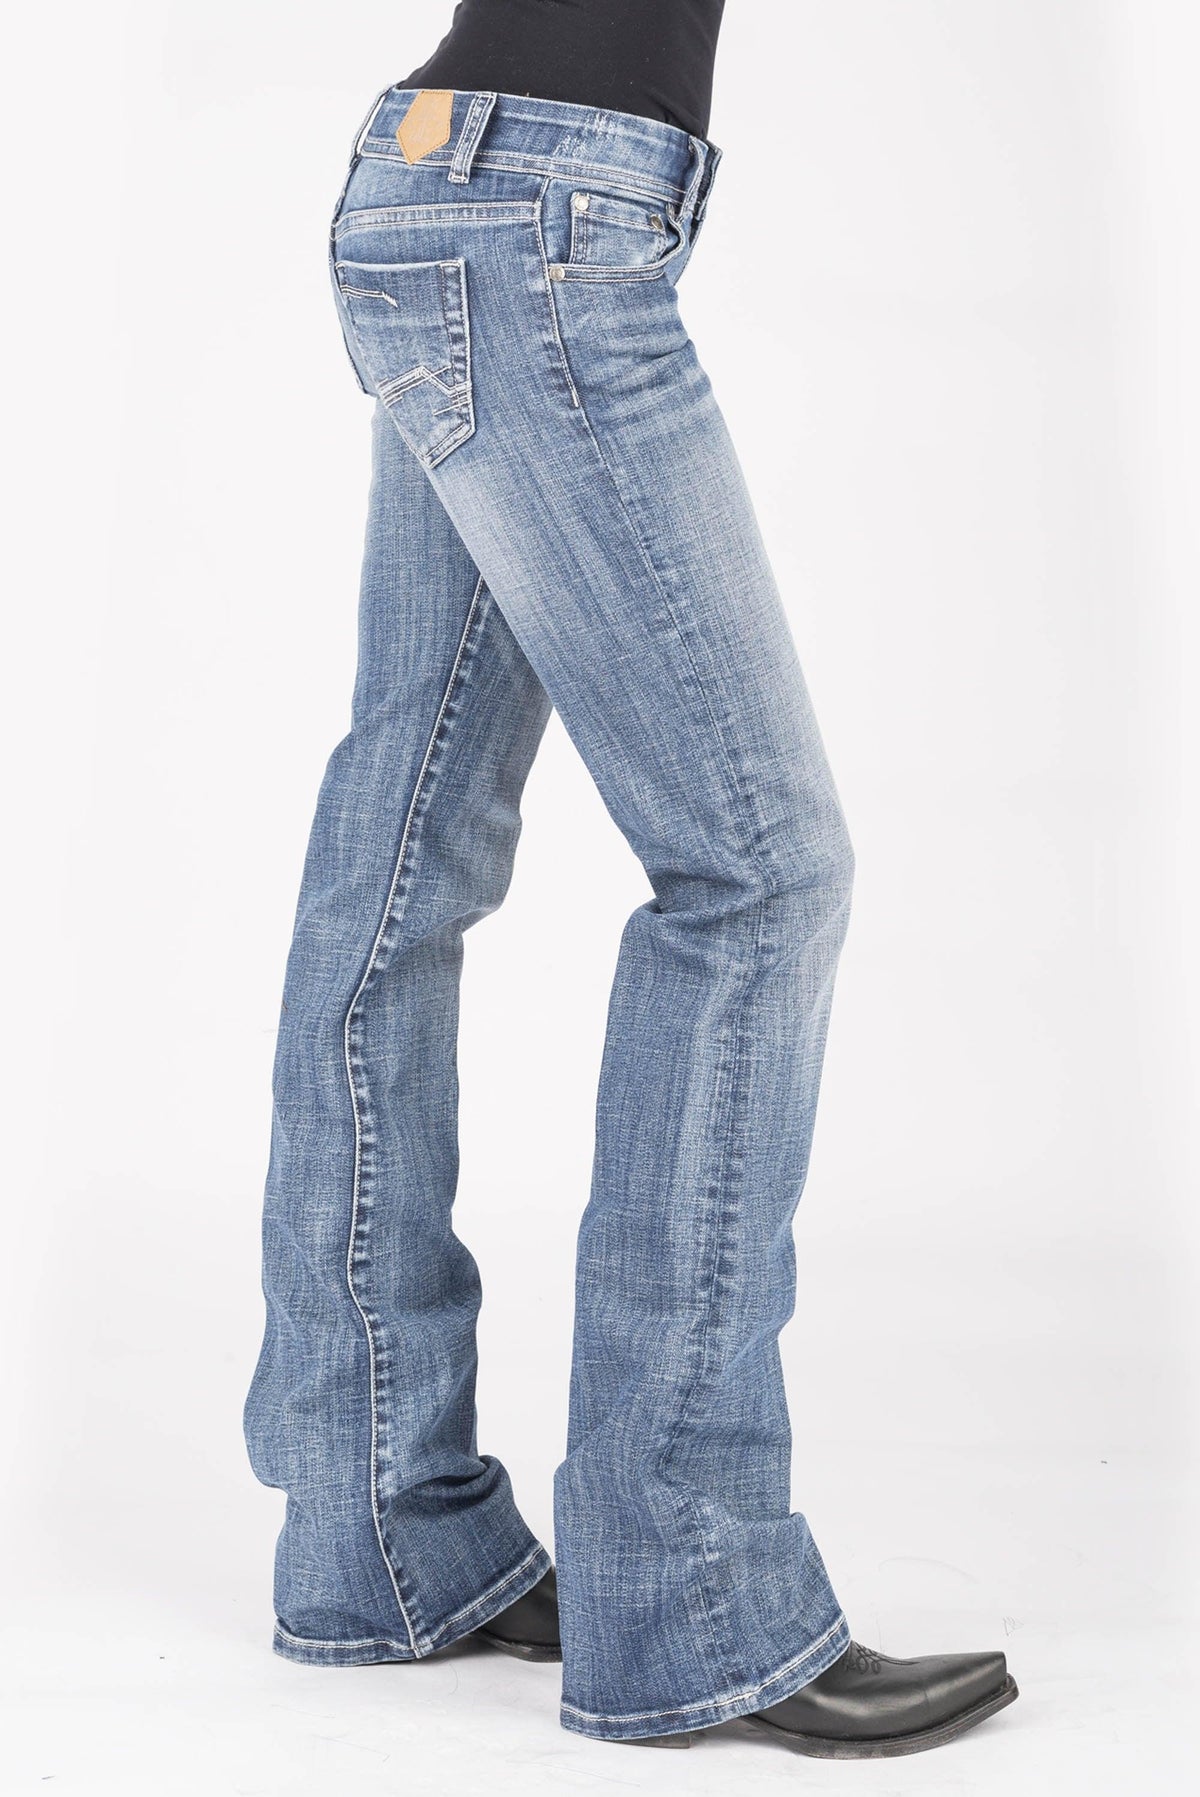 Tin Haul Denim Jeans Mens Regular Joe Fit Light 10-004-0420-1762